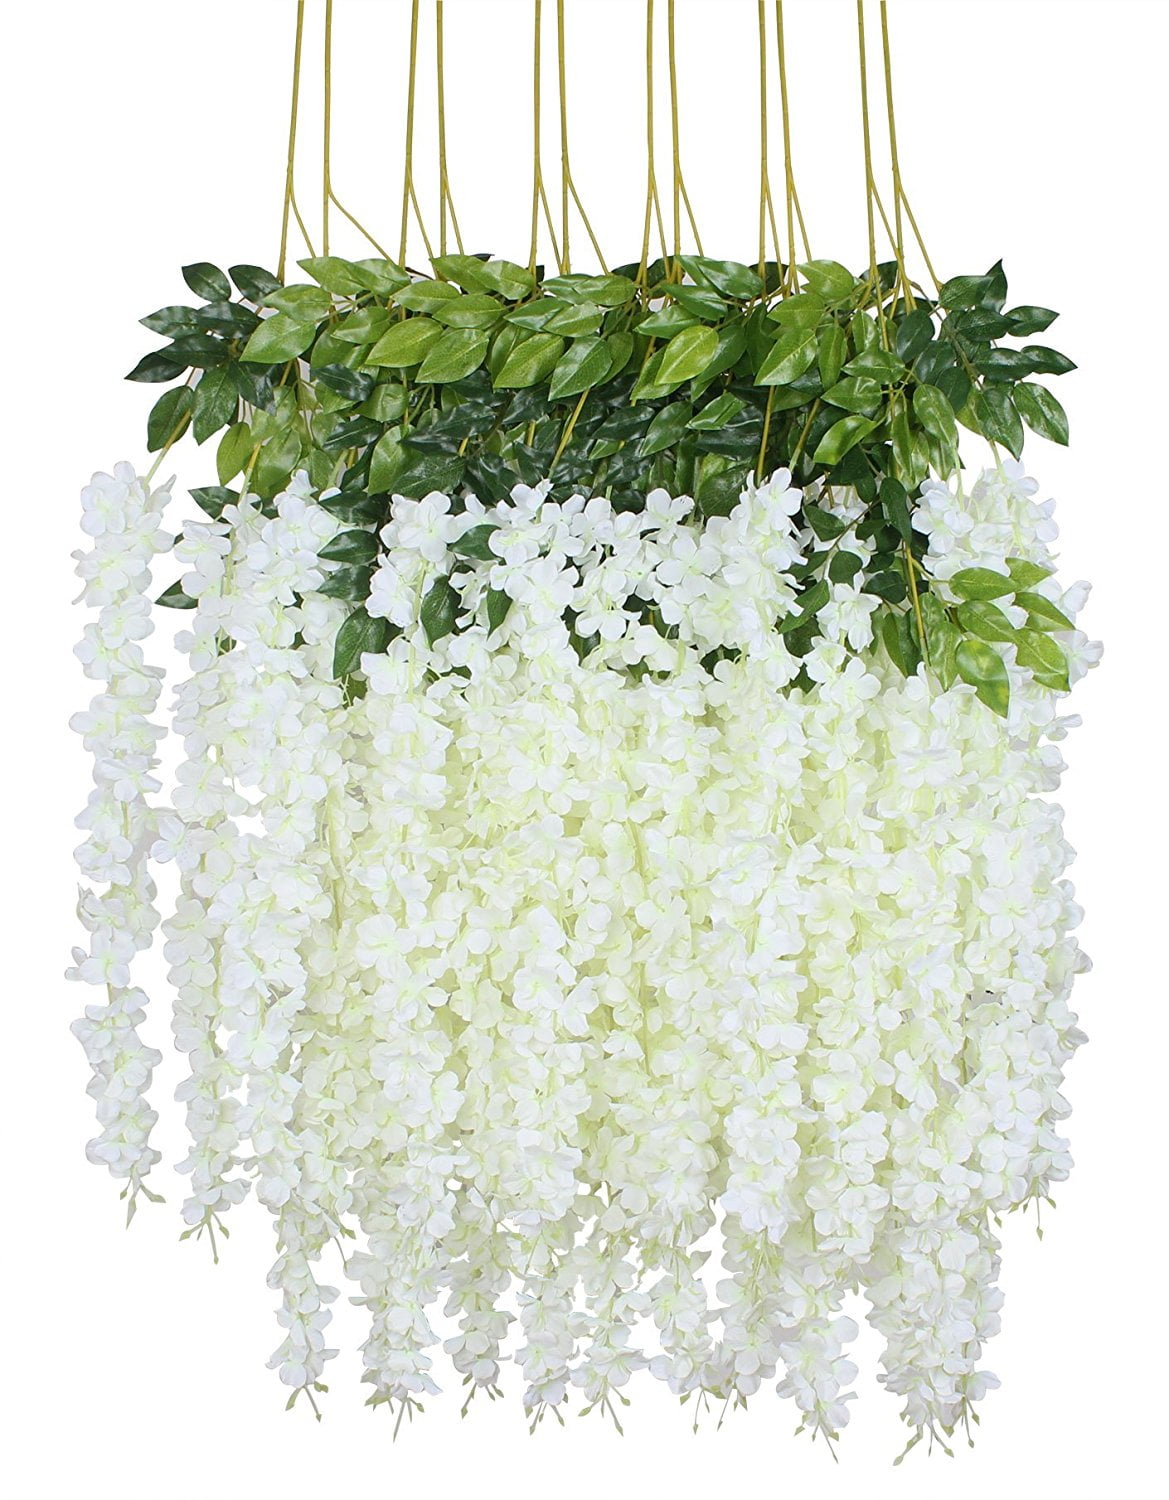 Details about   10Pcs Artificial Fake Flowers Wisteria Vine Ratta Hanging Garlands Wedding Decor 